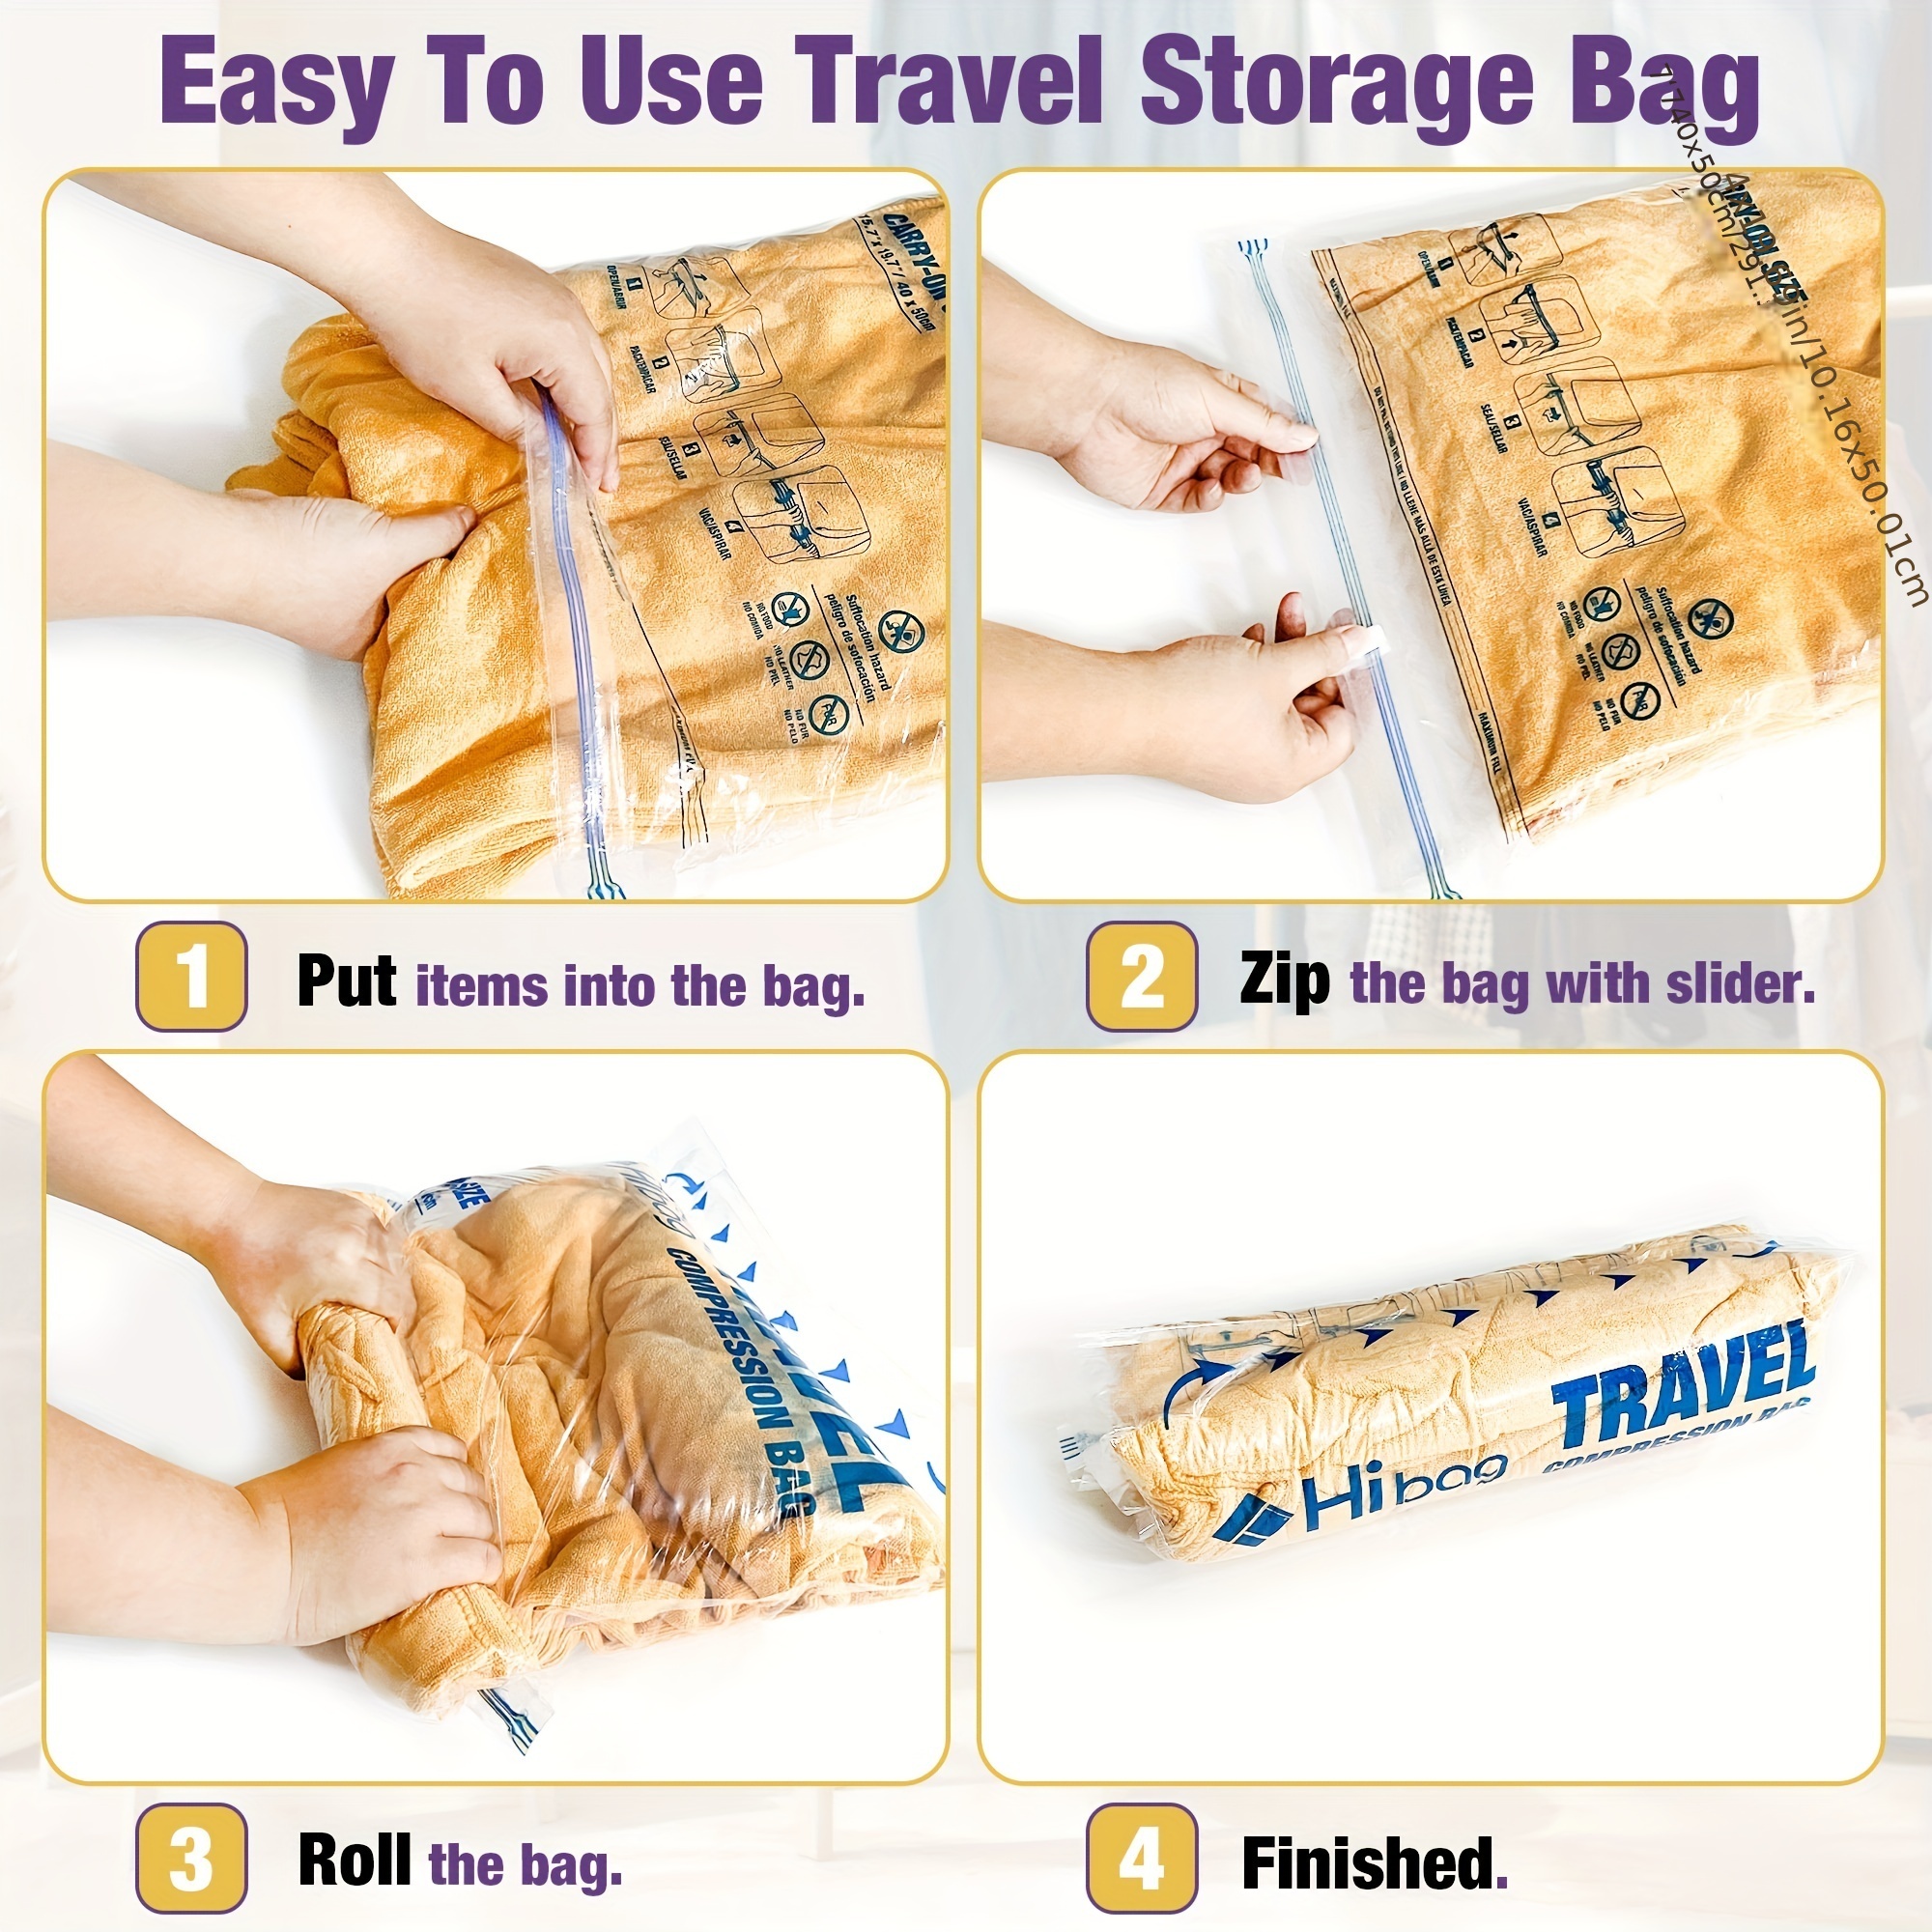 Hibag Vacuum Storage Bags, Space Saver Vacuum Seal Storage Bags 30-Pack  Sealer Bags for Clothes, Clothing, Bedding, Comforter, Blanket